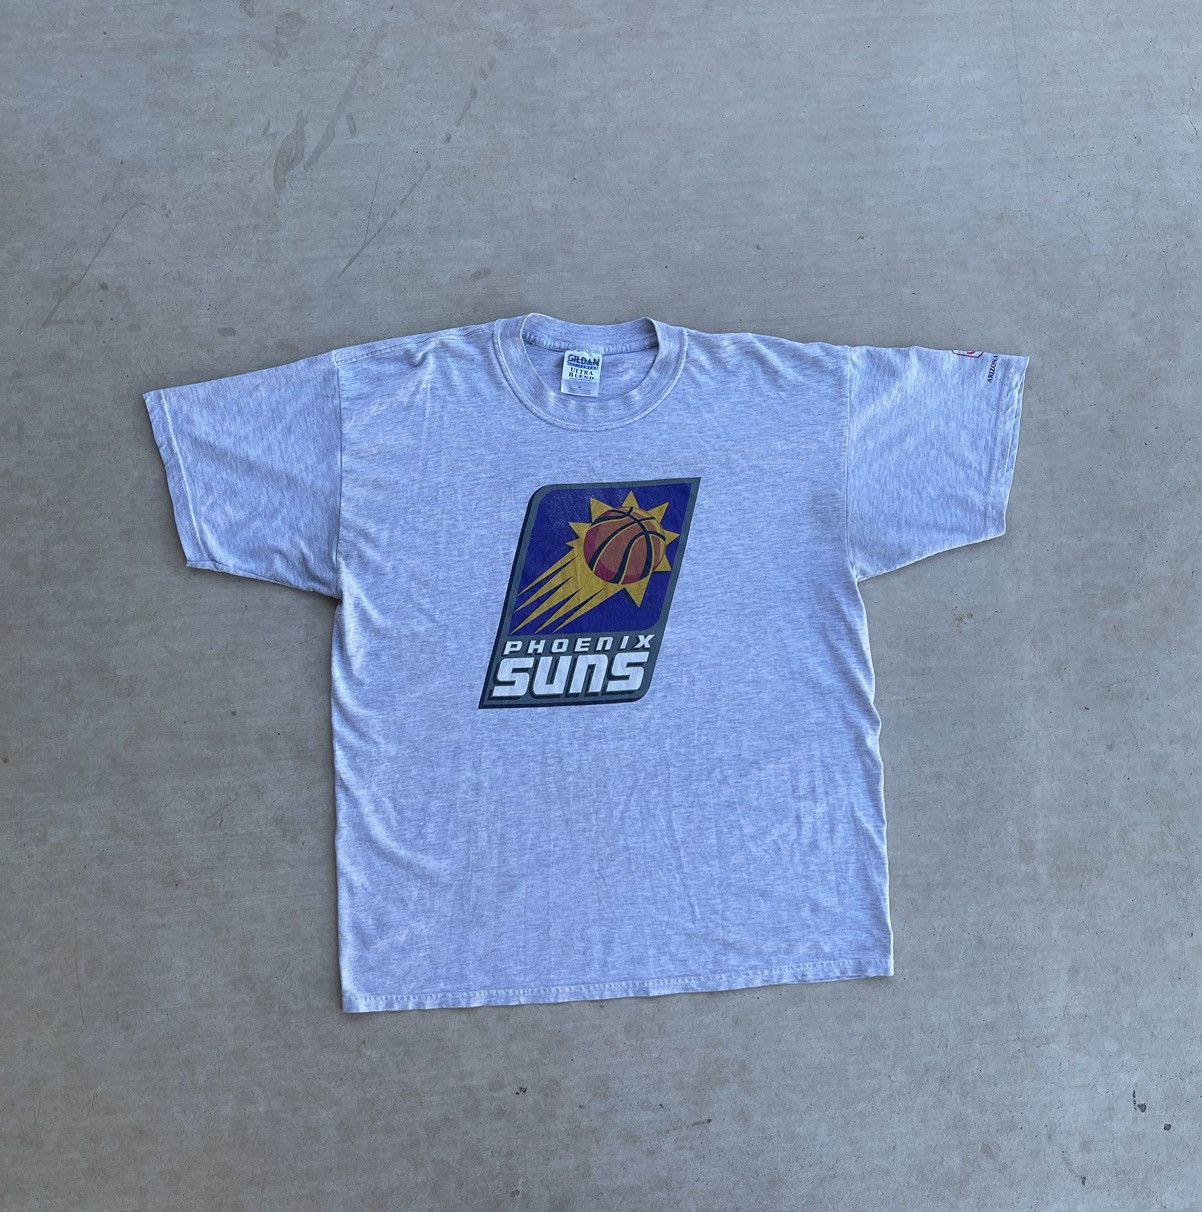 Nike Vintage Early 2000’s Phoenix Suns Basketball T Shirt Size XL Size US XL / EU 56 / 4 - 3 Thumbnail